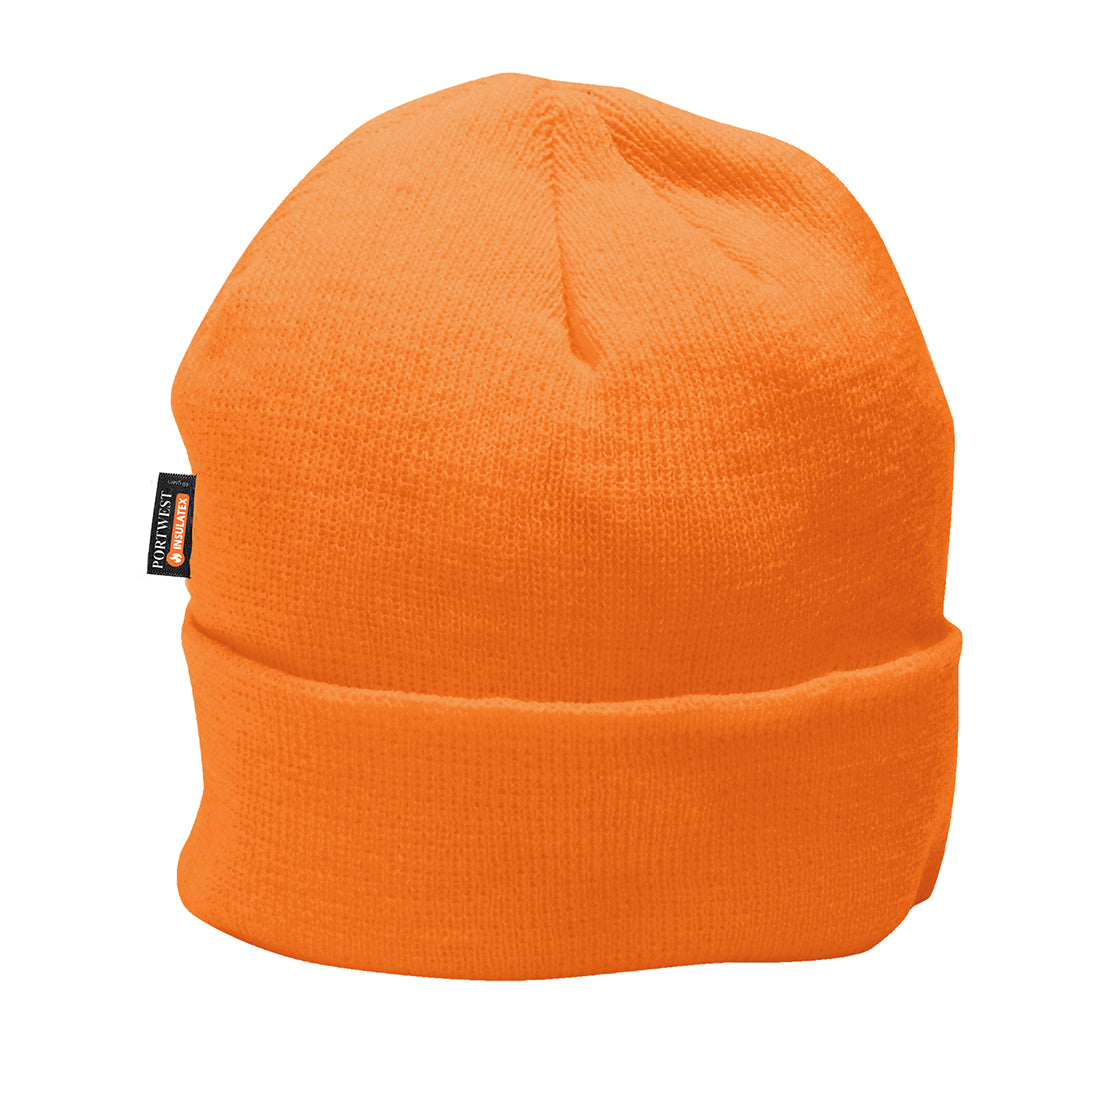 Insulatex Knit Beanie Orange- B013